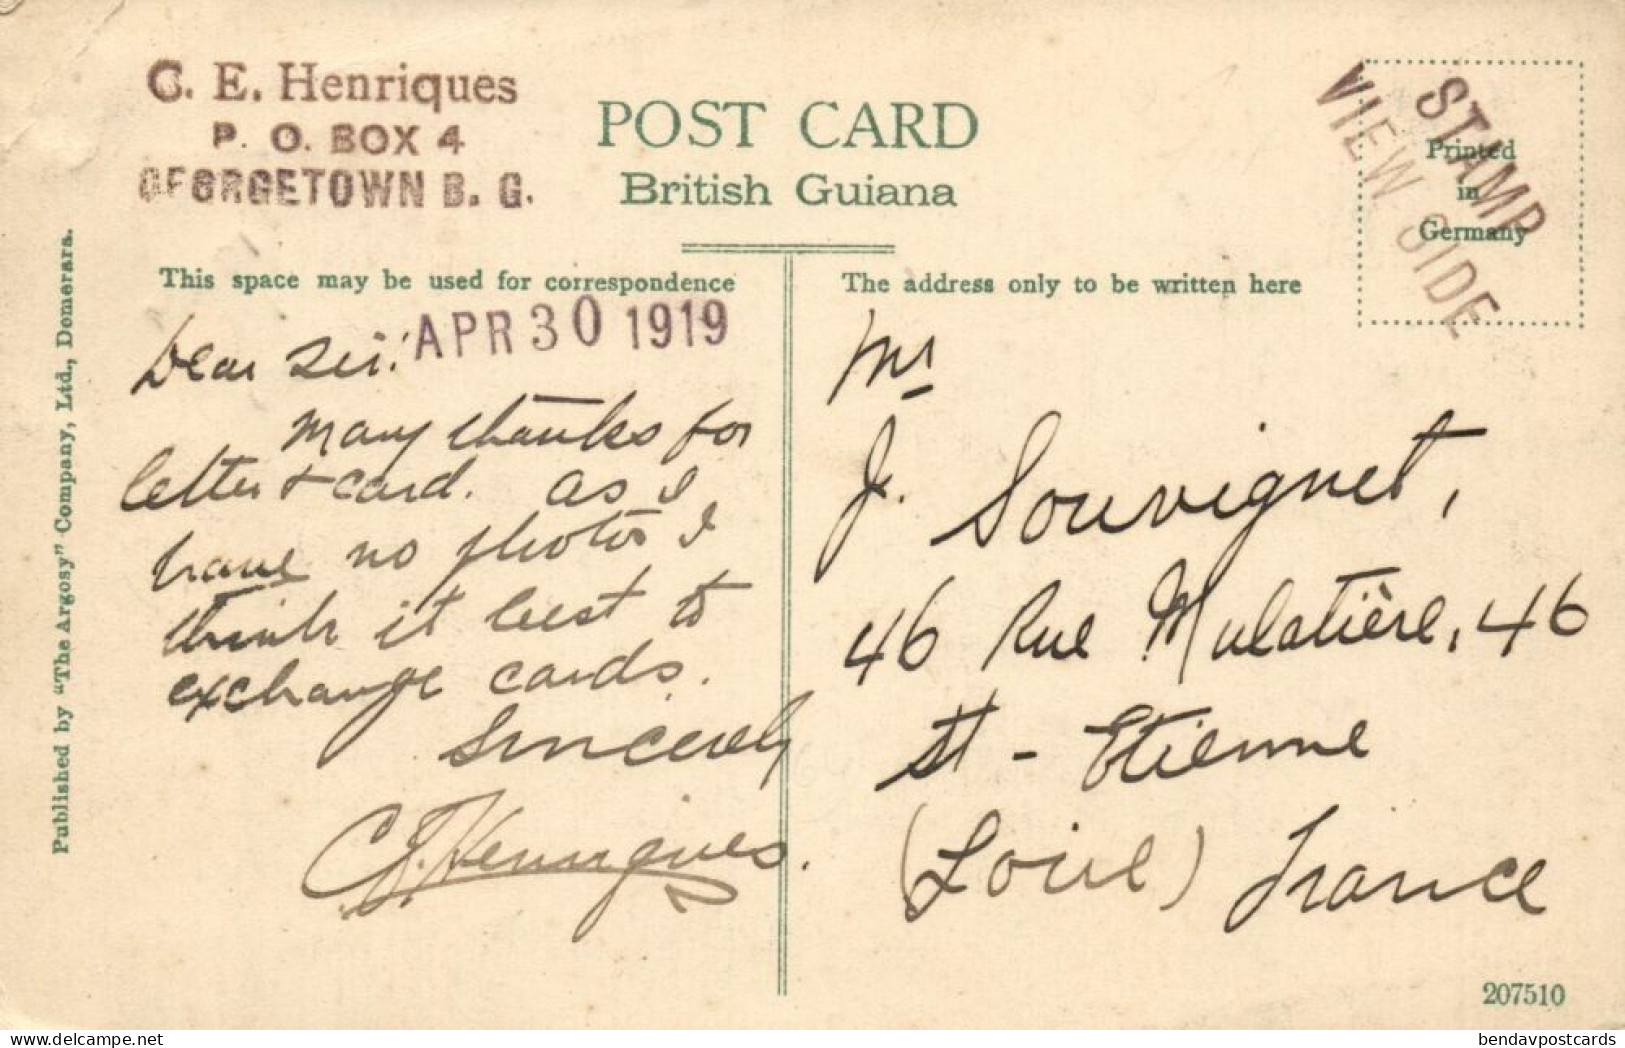 British Guiana, Guyana, GEORGETOWN, Club & Carnegie Free Library (1919) Postcard - Guyana (formerly British Guyana)